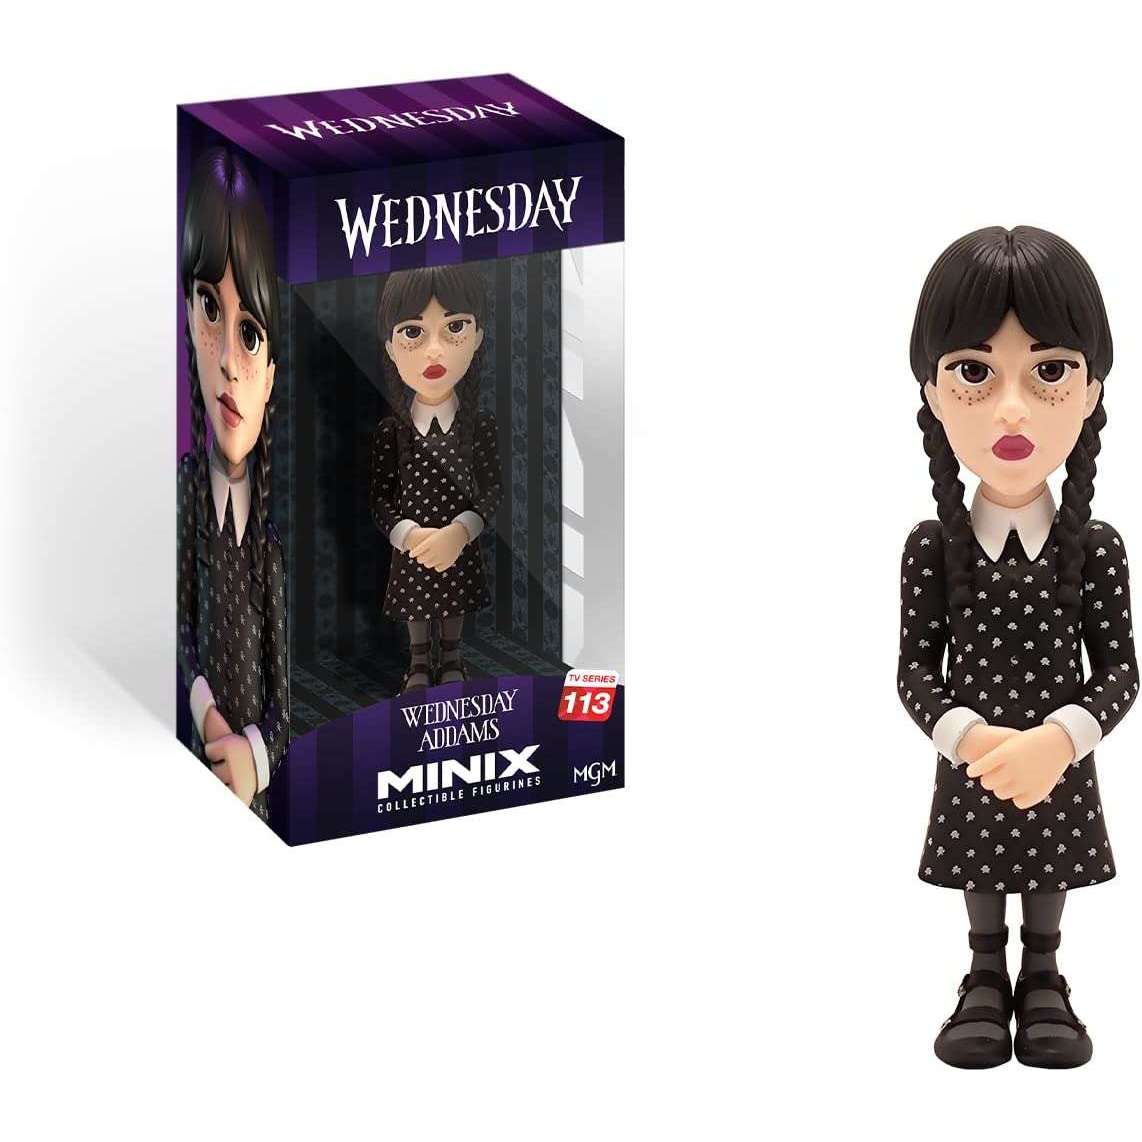 Toys N Tuck:Wednesday Minix Figure - Wednesday Addams,Wednesday